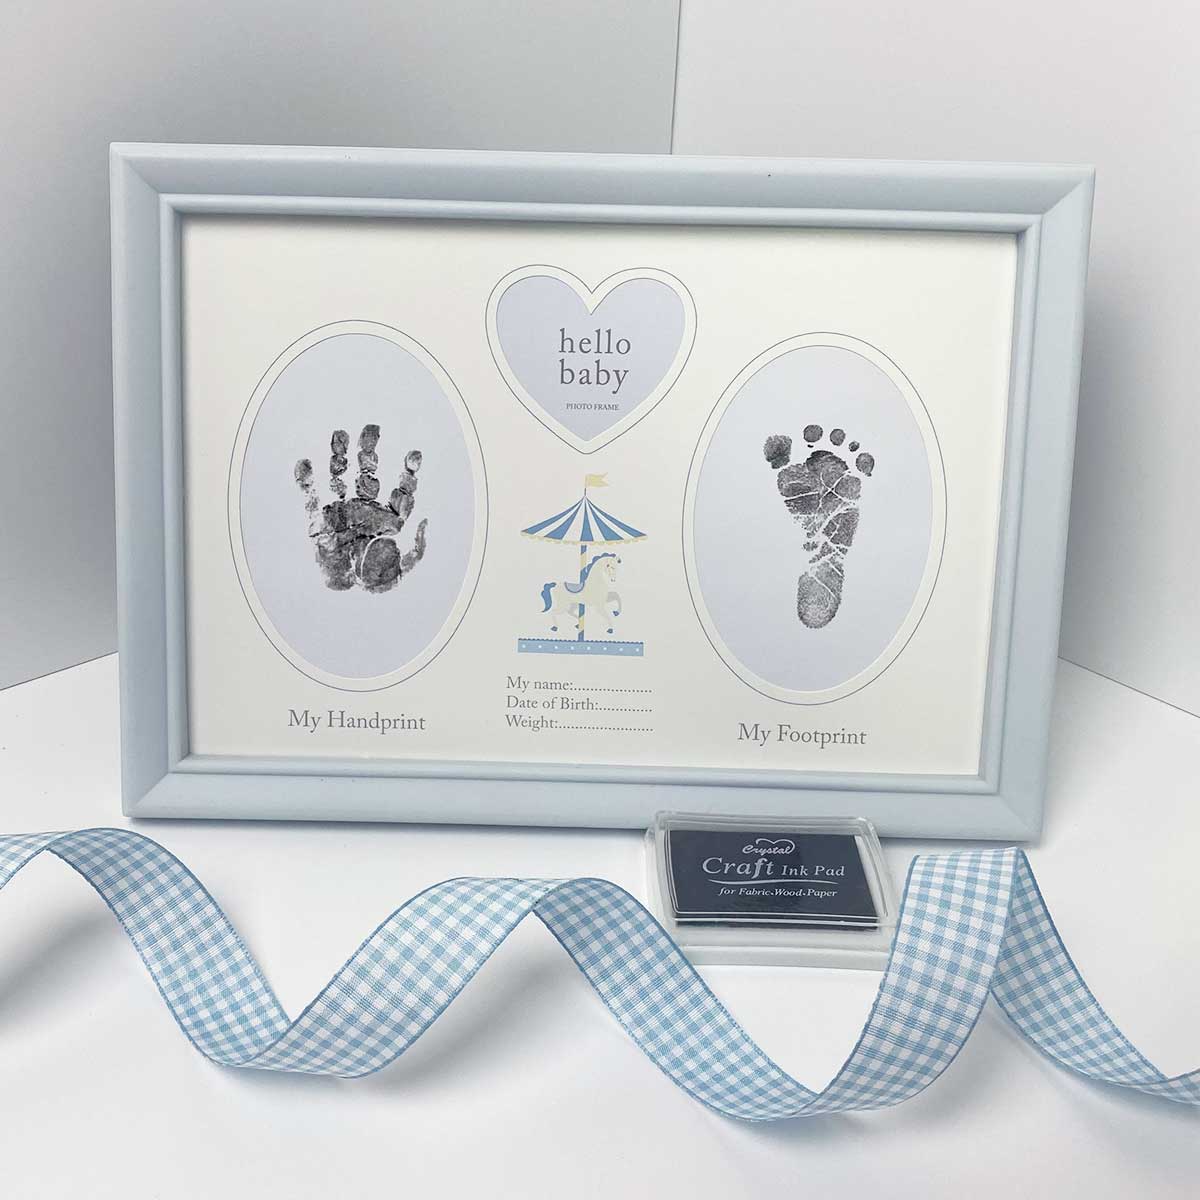  Felt Like Sharing Baby Hand and Footprint Kit, White Frame,  Baby Footprint Kit : Baby